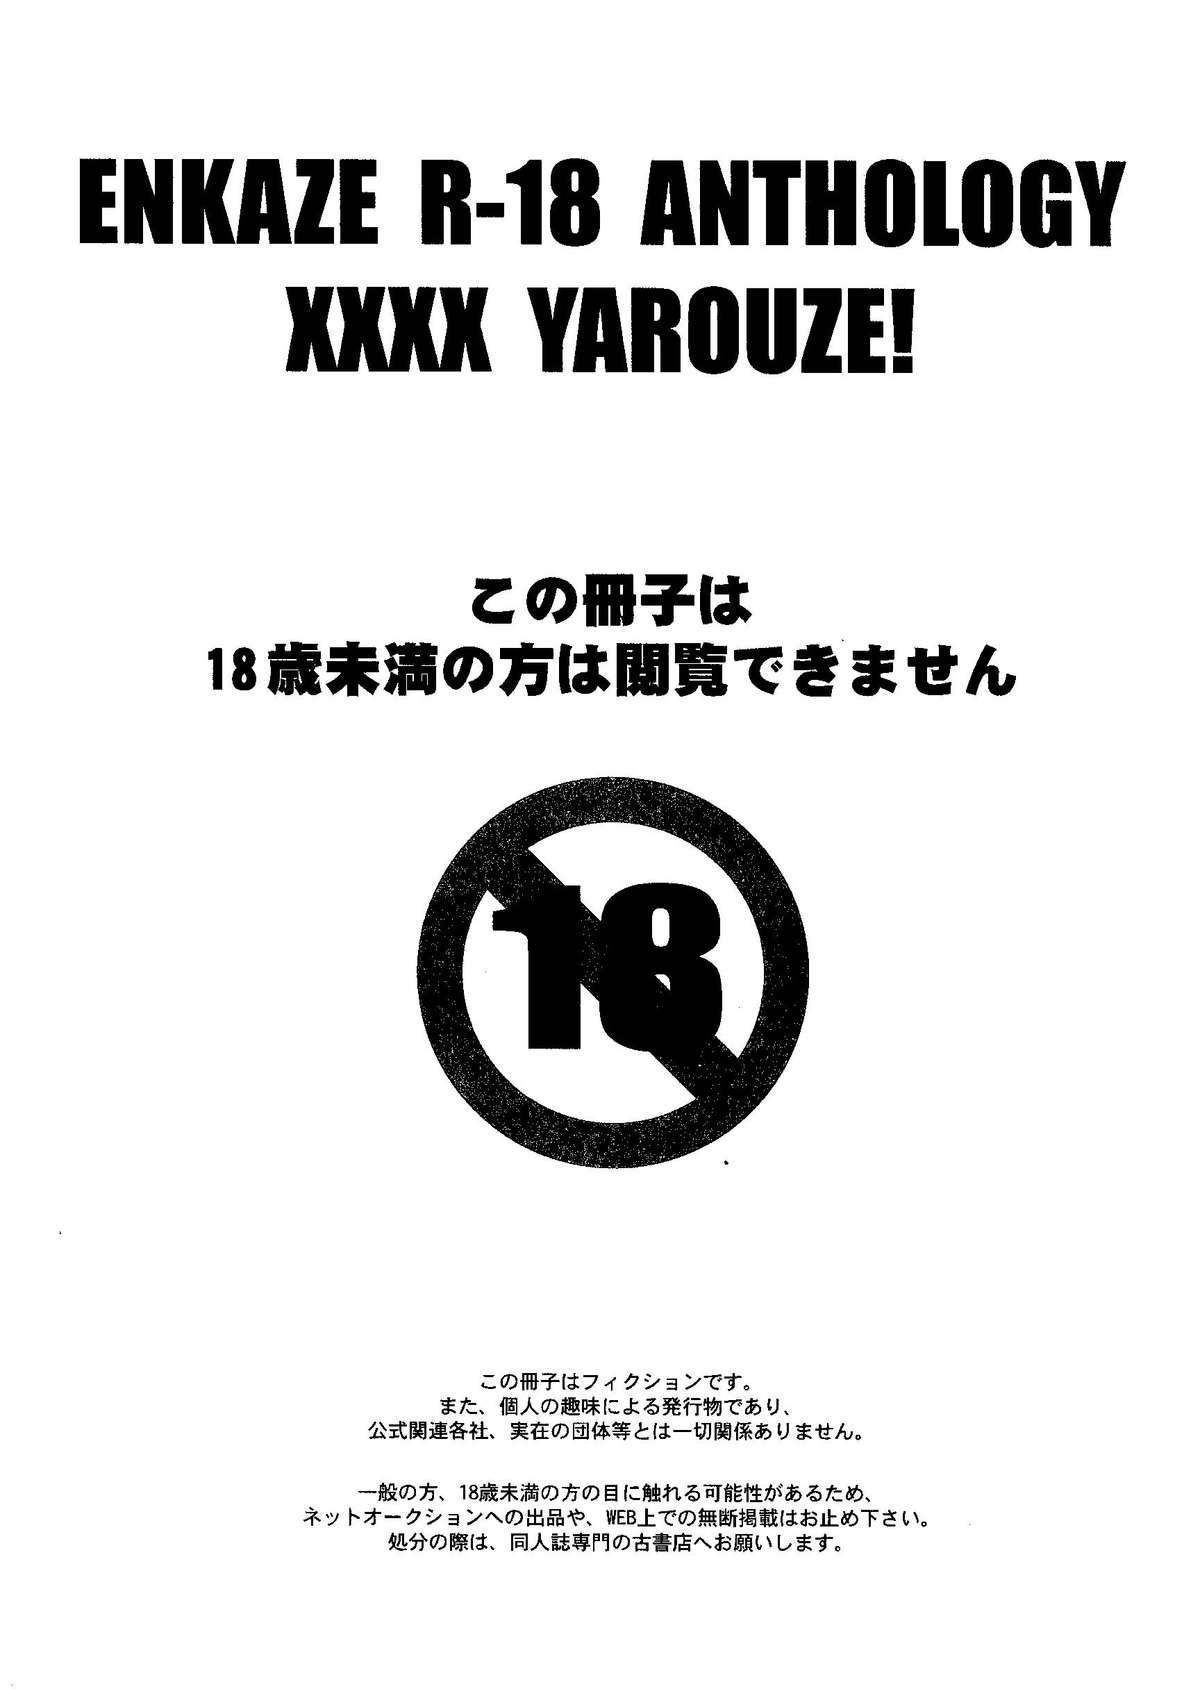 Hot Cunt Kirigakure Takaya (Aniki Otokodou) - ×××× Yarouze! (Inazuma Eleven) - Inazuma eleven Pack - Page 7